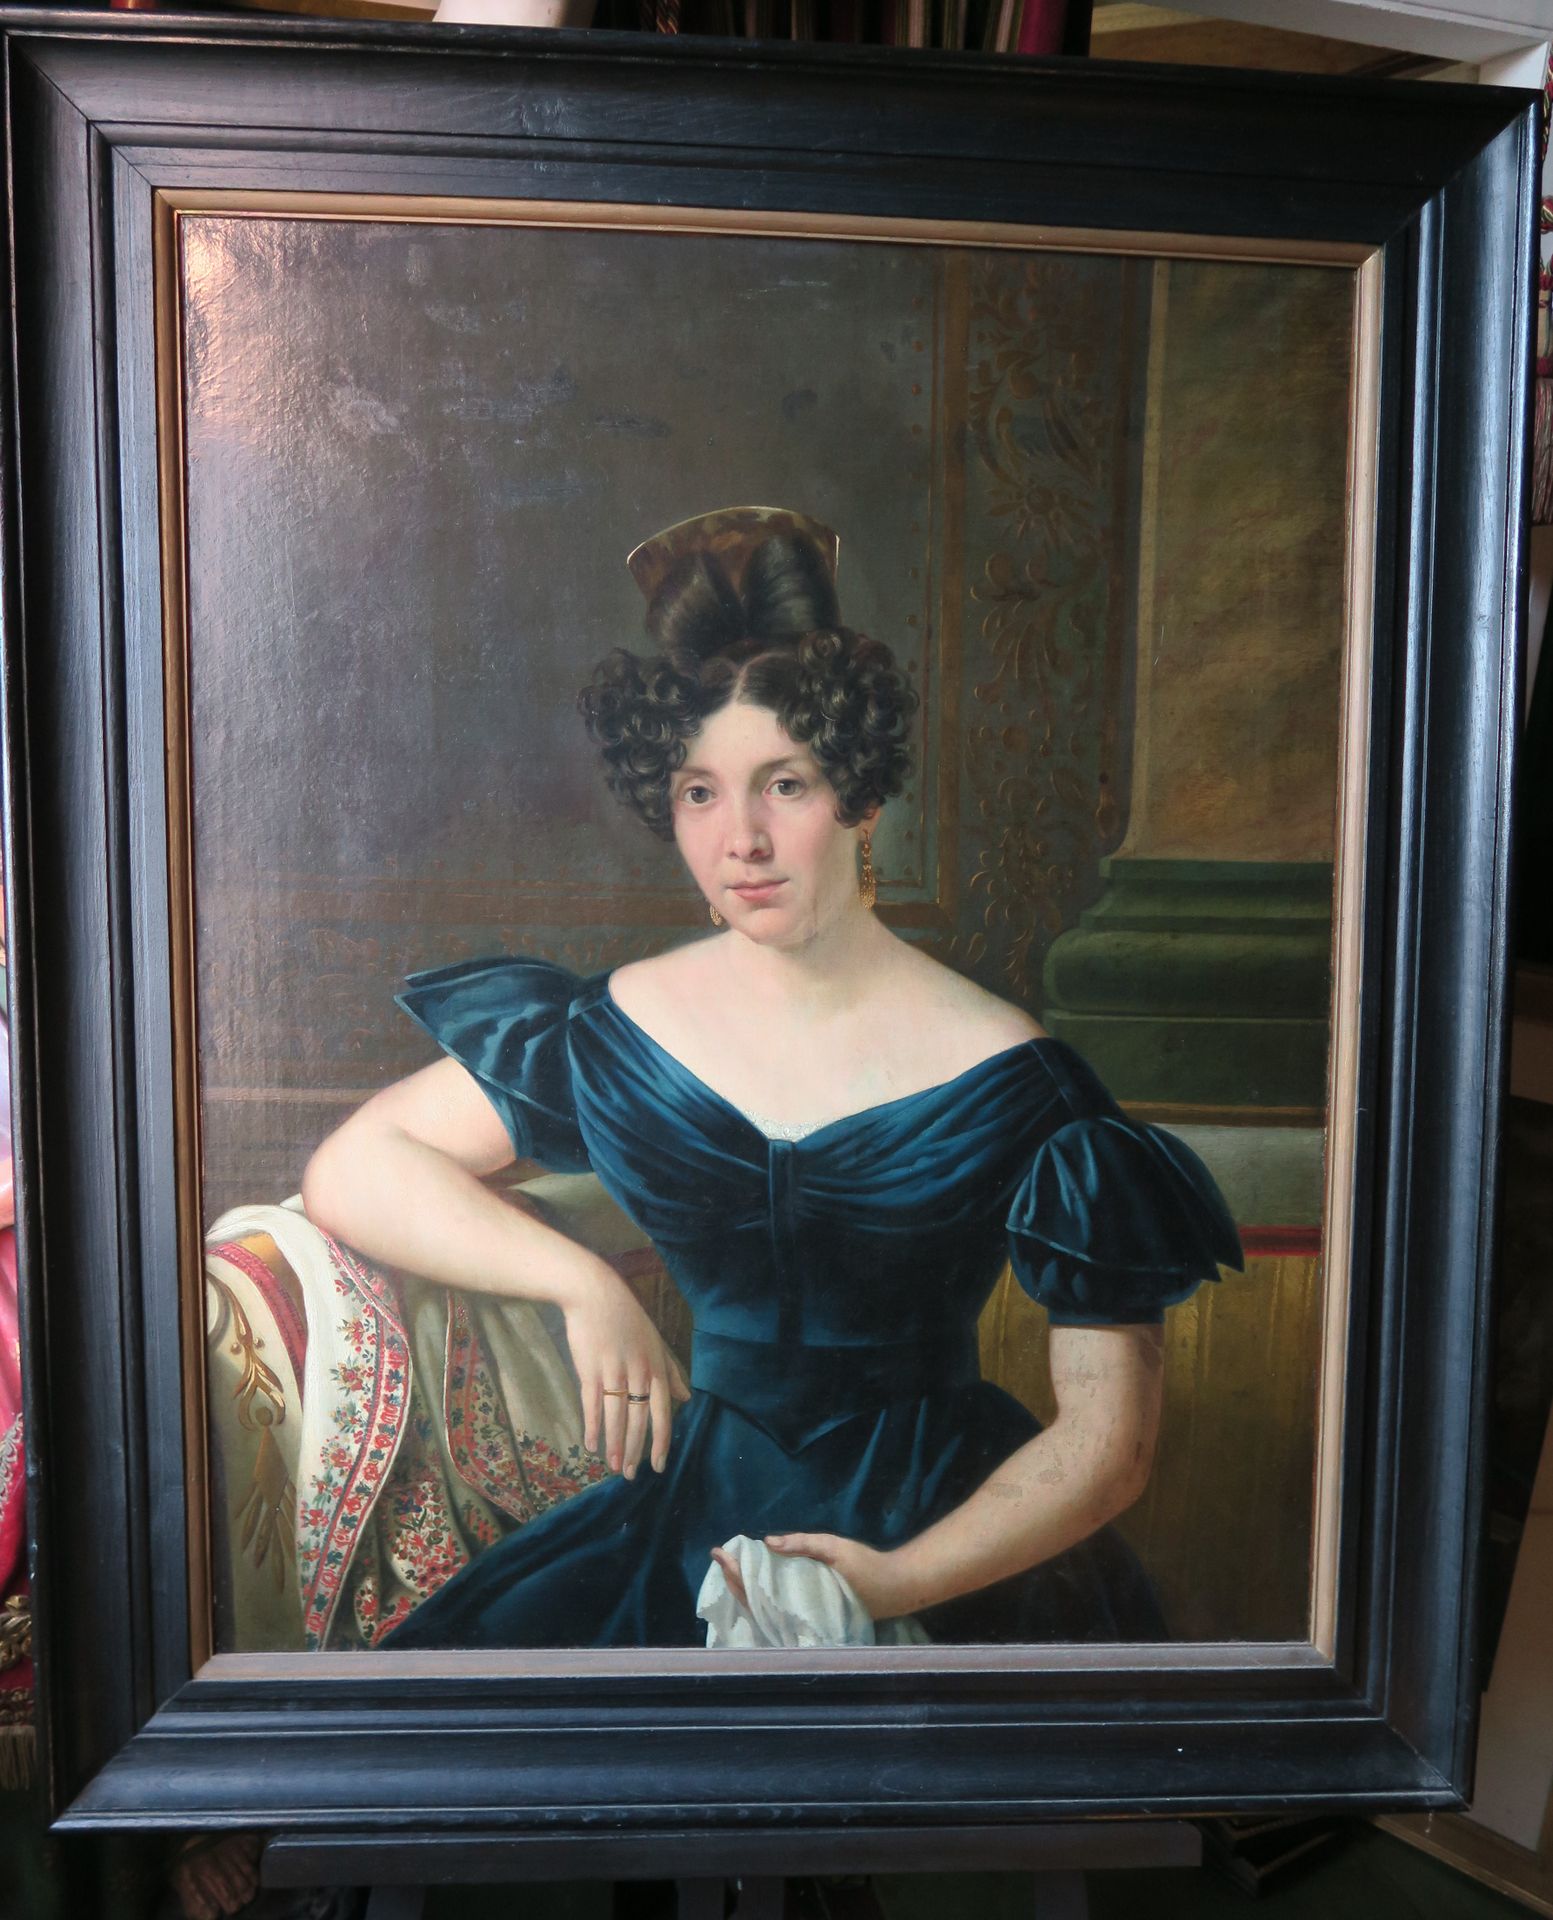 Null 法国学校约1820-1830年 
穿着蓝色天鹅绒衣服的女人肖像
布面油画
97,5 x 78,5 cm (修复，污渍)